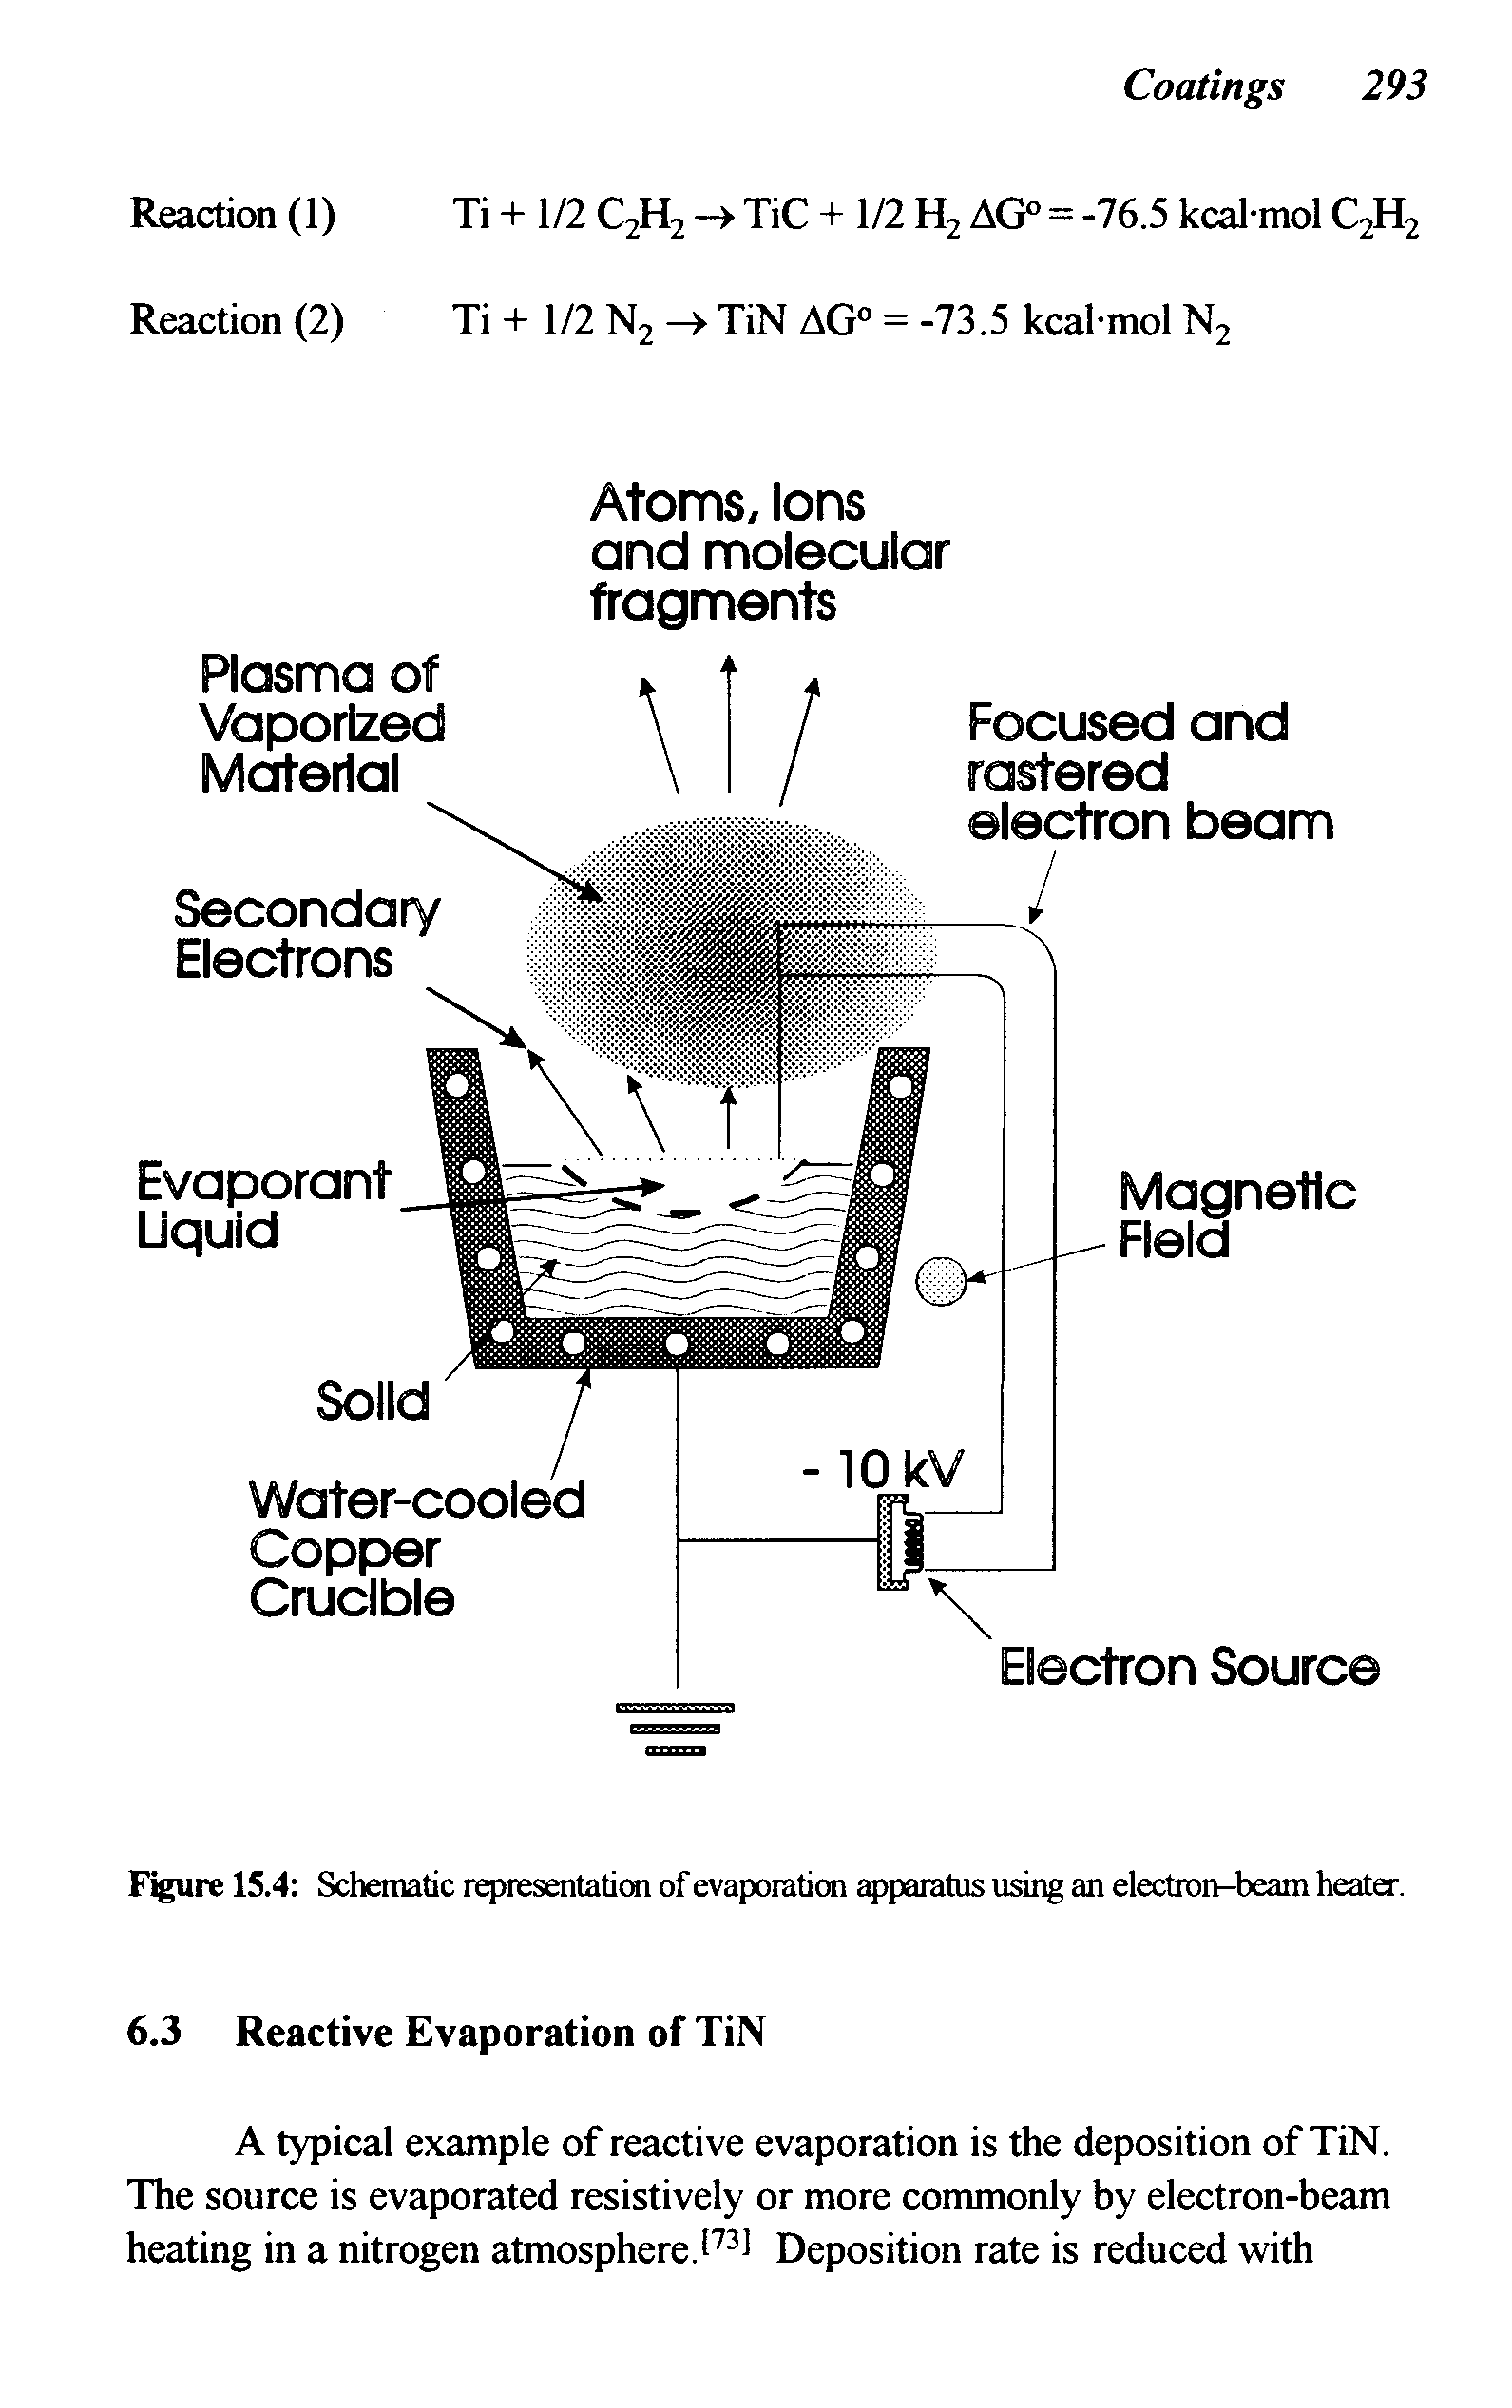 Figure 15.4 Schematic representatiai of evaporation apparatus using an electron-beam heater.